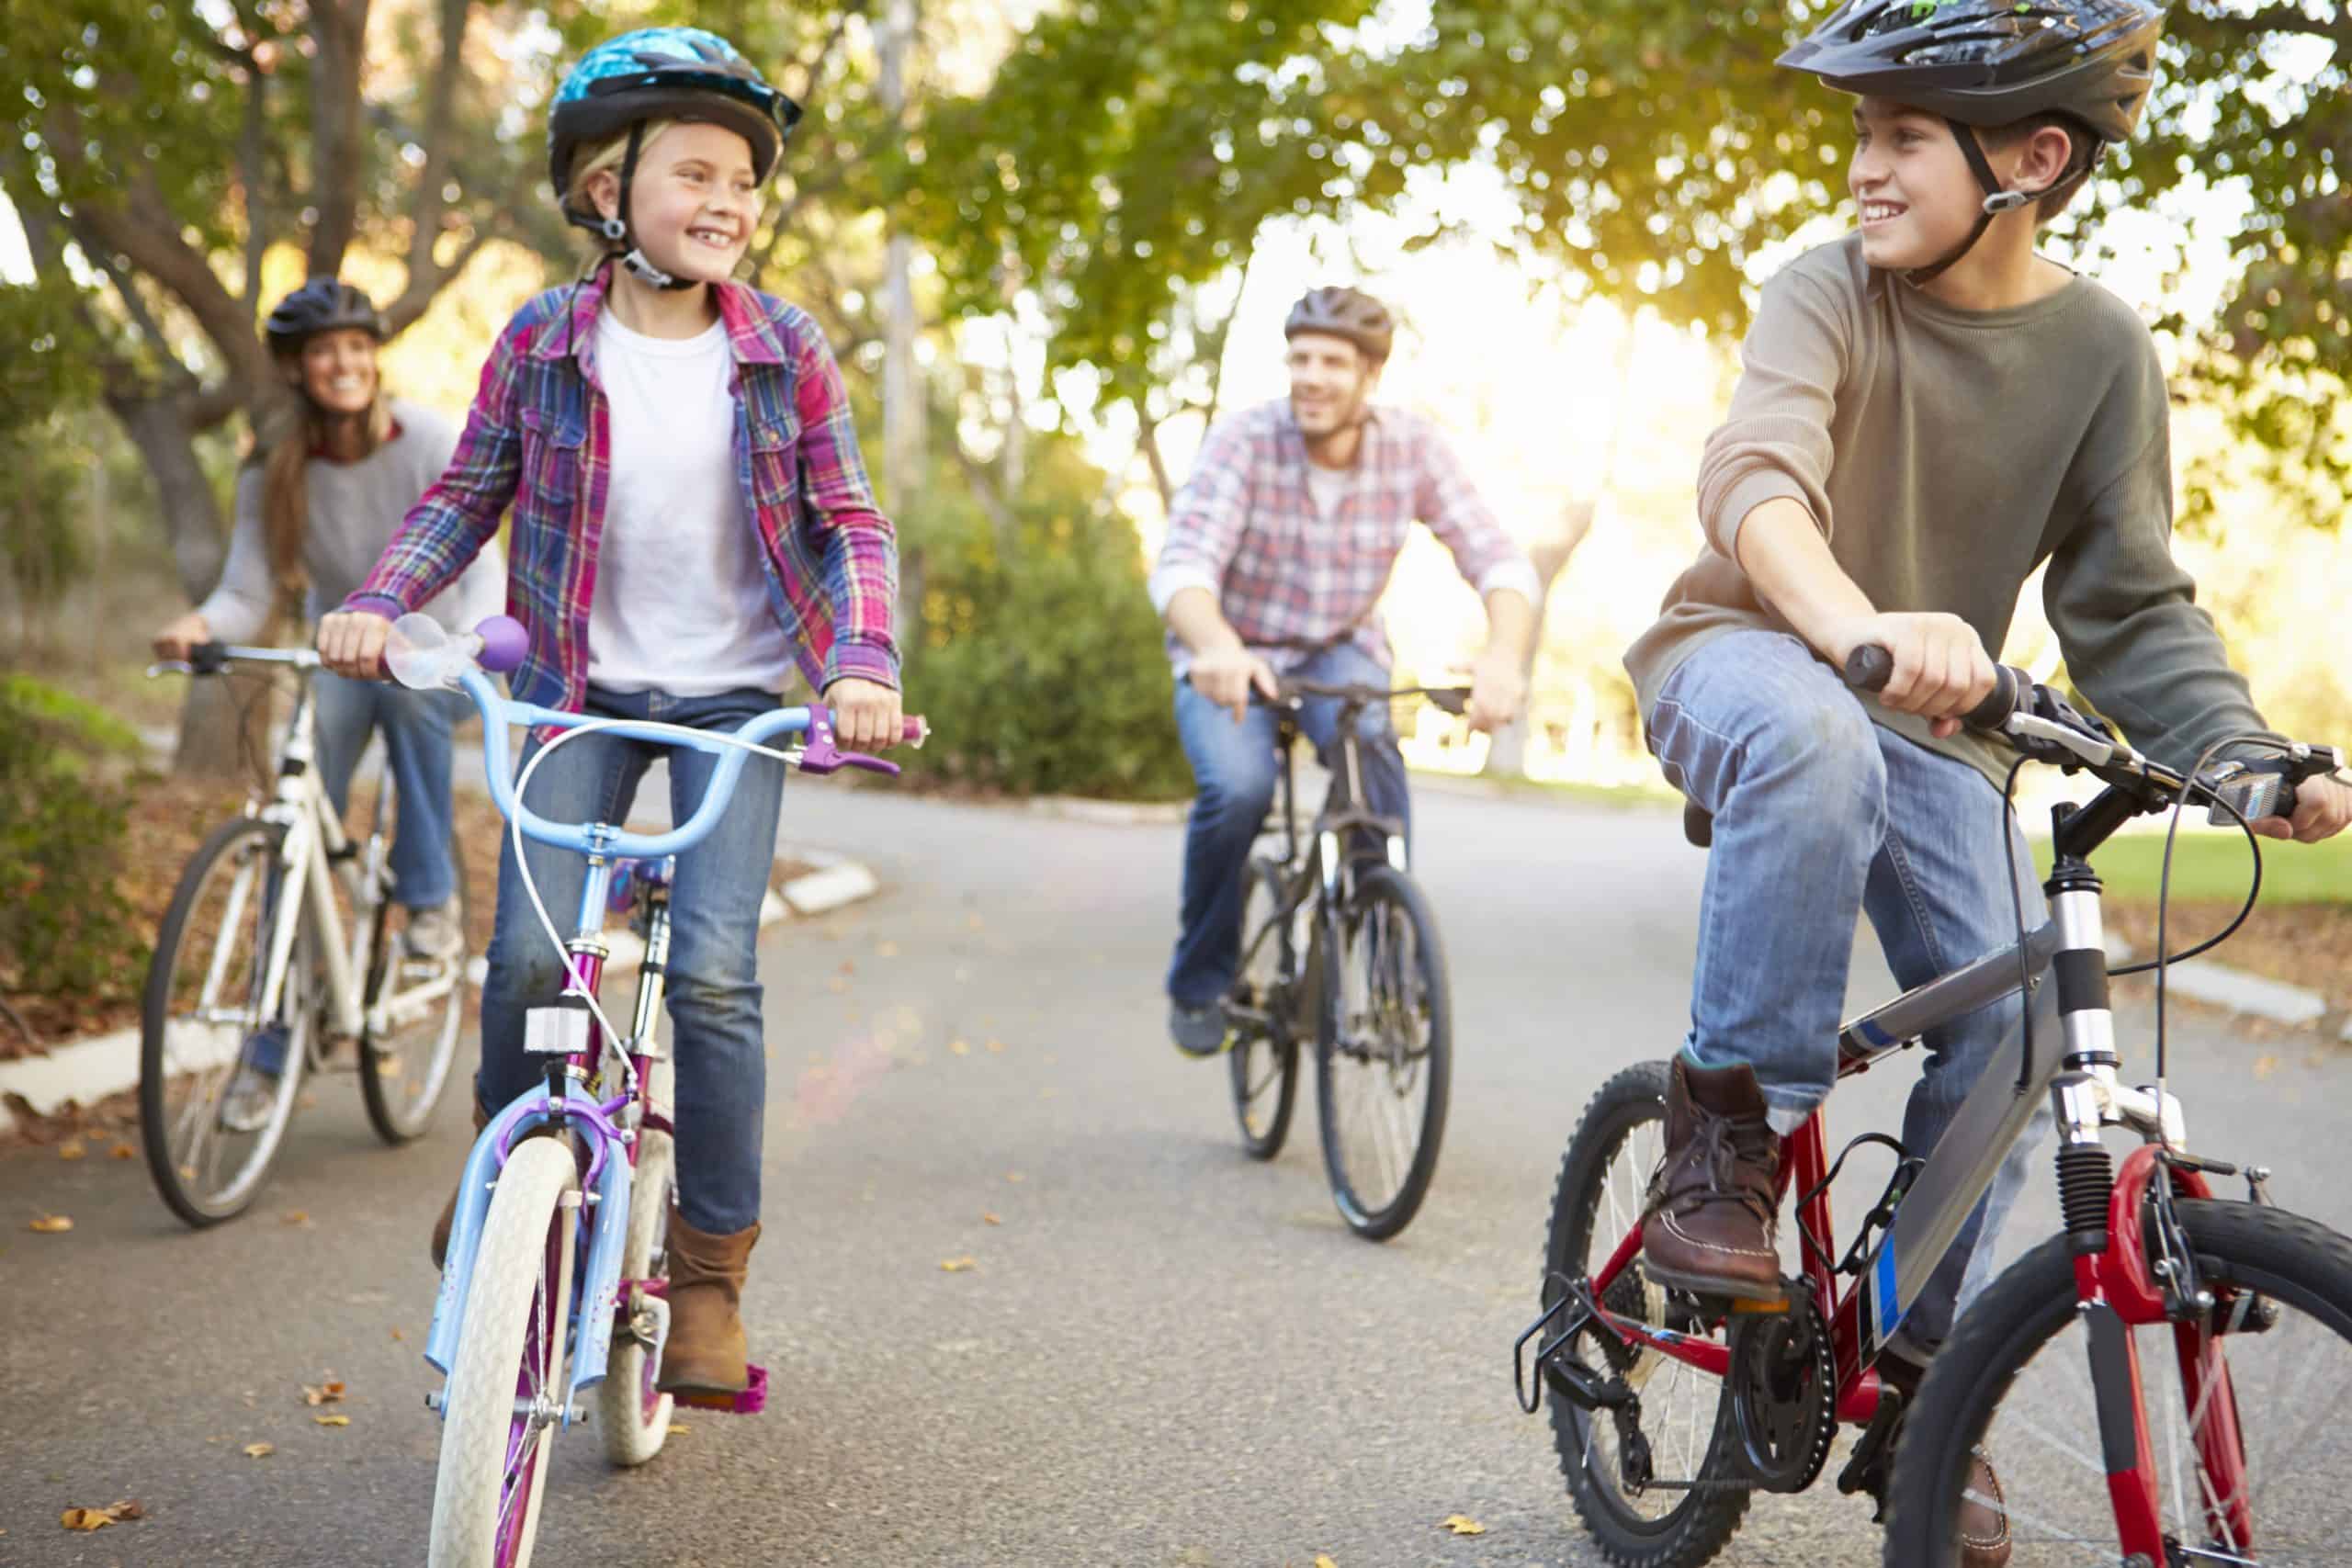 The children are riding bikes. Дети с велосипедом. Кататься на велосипеде. Подросток на велосипеде. Велосипеды для всей семьи.